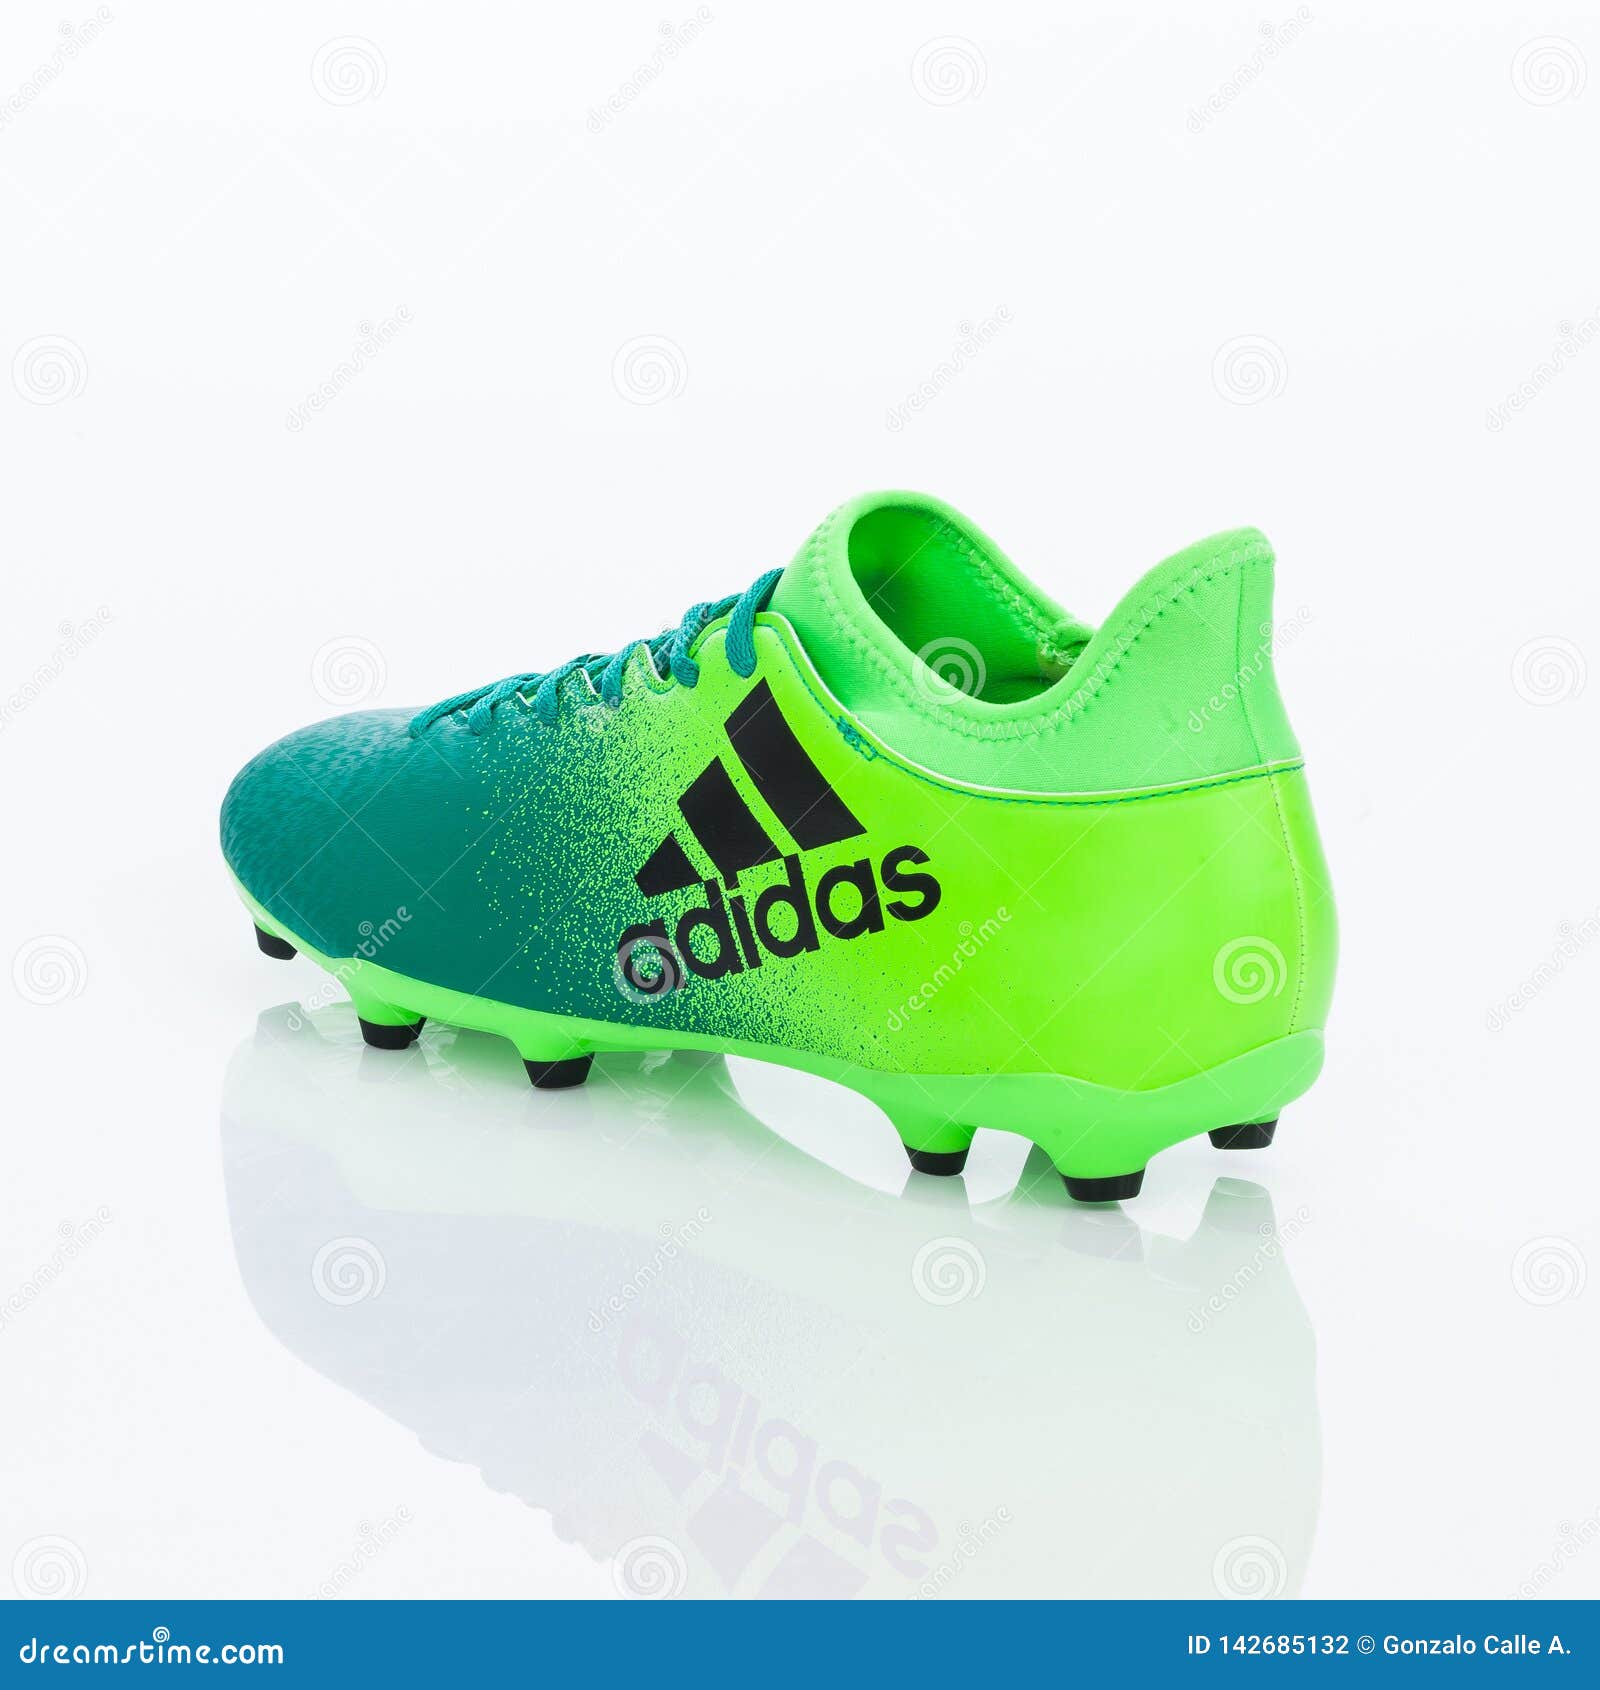 adidas shoes 2019 football